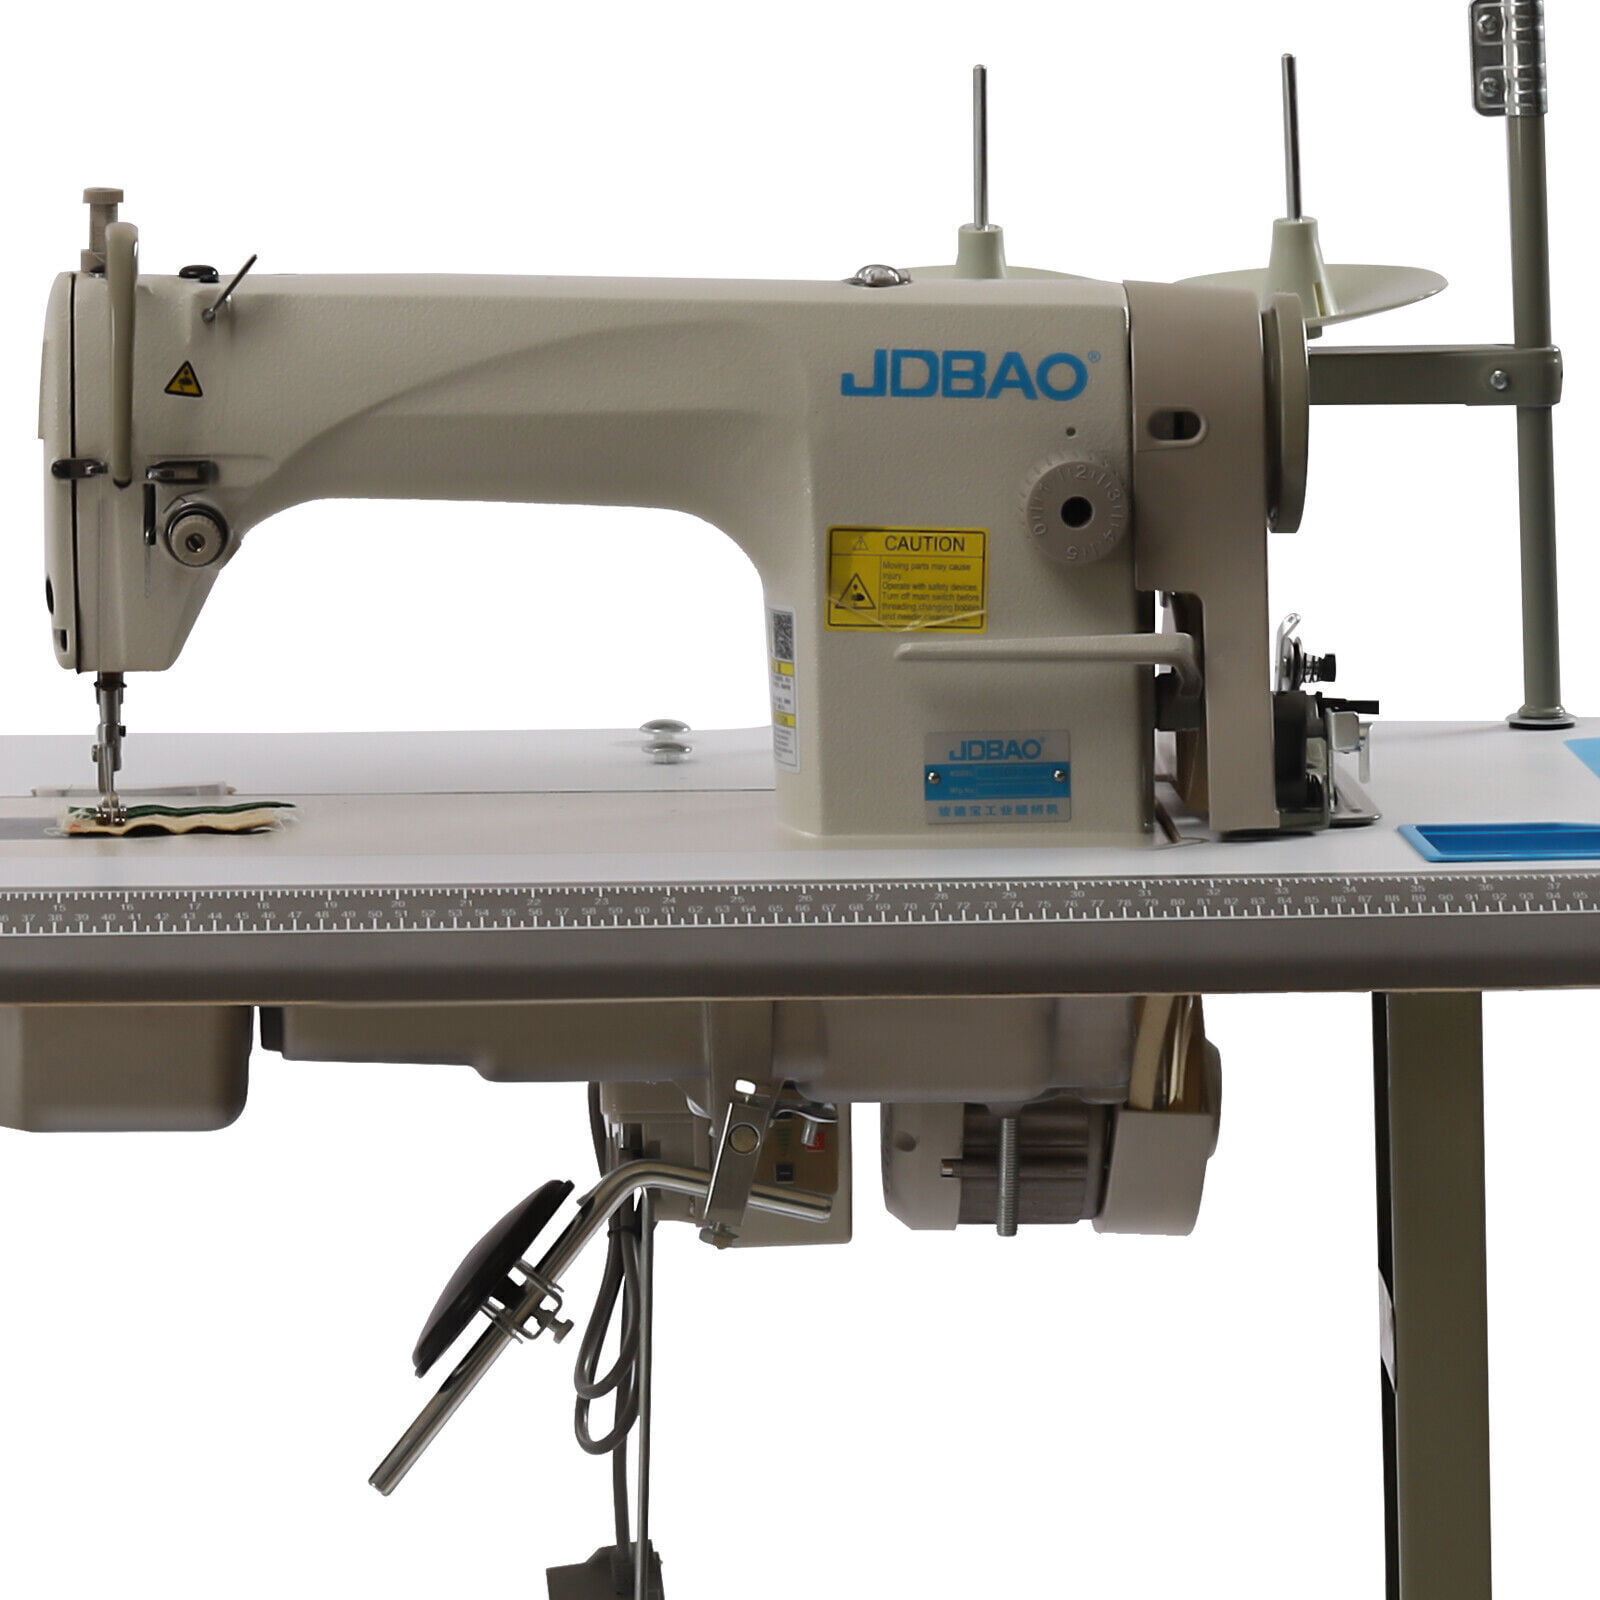 Miumaeov Industrial Sewing Machine Motor 550W 3500 rpm Max Sewing Speed  Upholstery Sewing Machine Motor with Table Stand Commercial Sewing Machine  Stitch Length 0-0.2in 